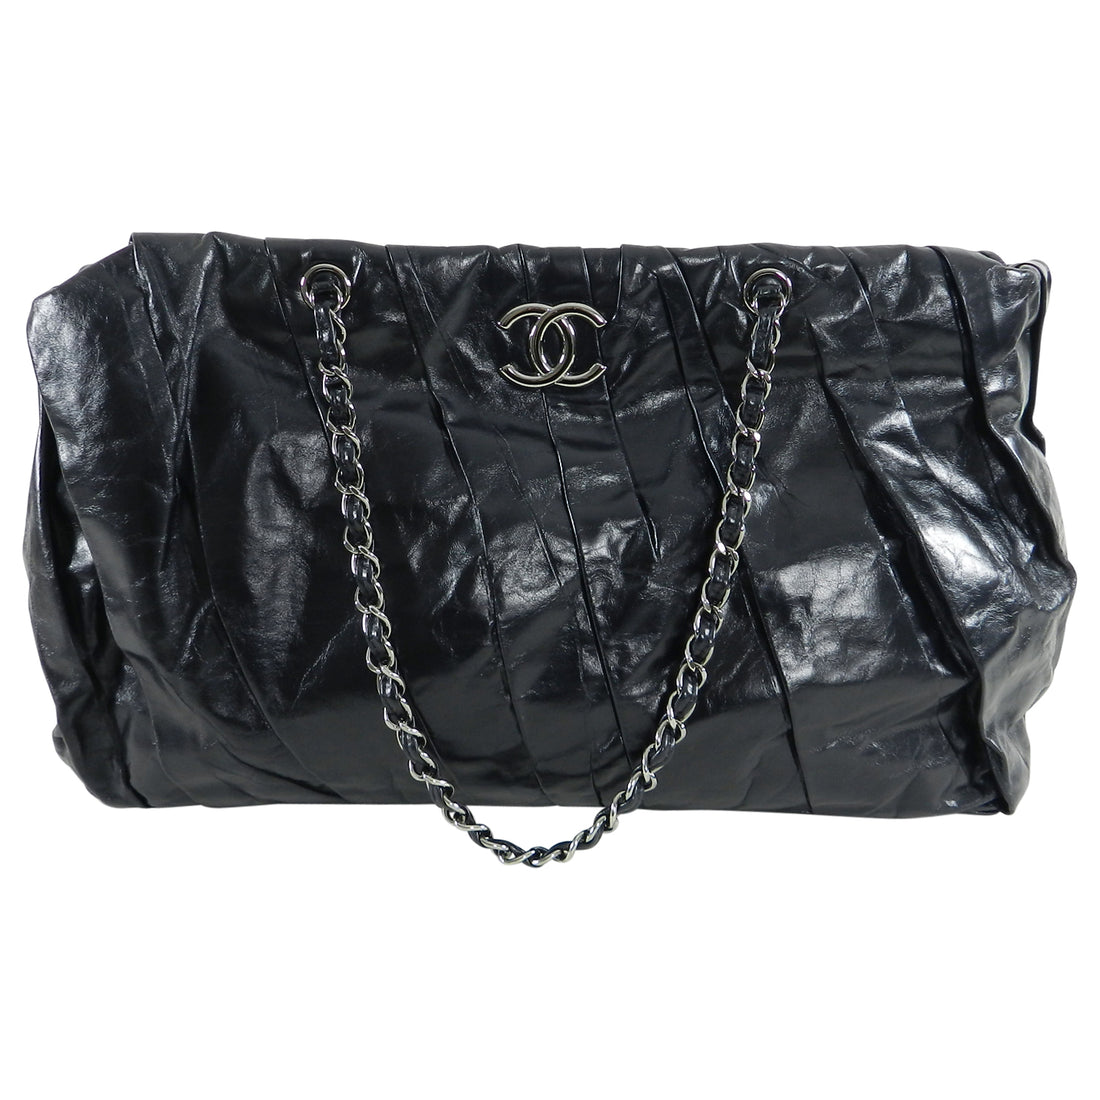 chanel black leather clutch bag